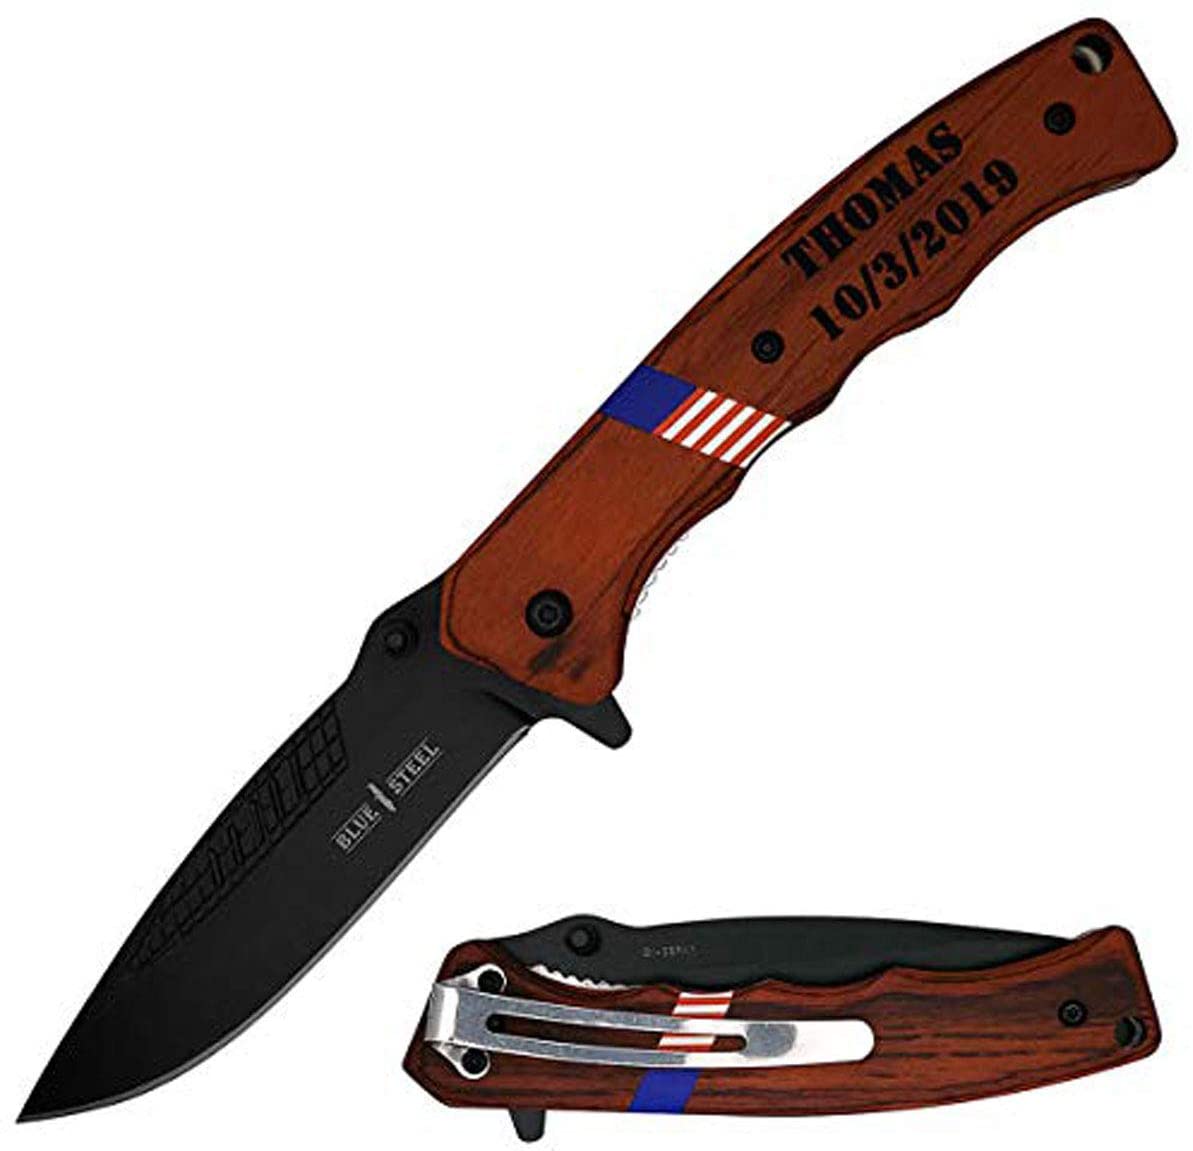 GIFTS INFINITY 8" Folding Pocket Knife Flipper Liner Lock Knife, Black Stonewashed Blade with Wood Handles